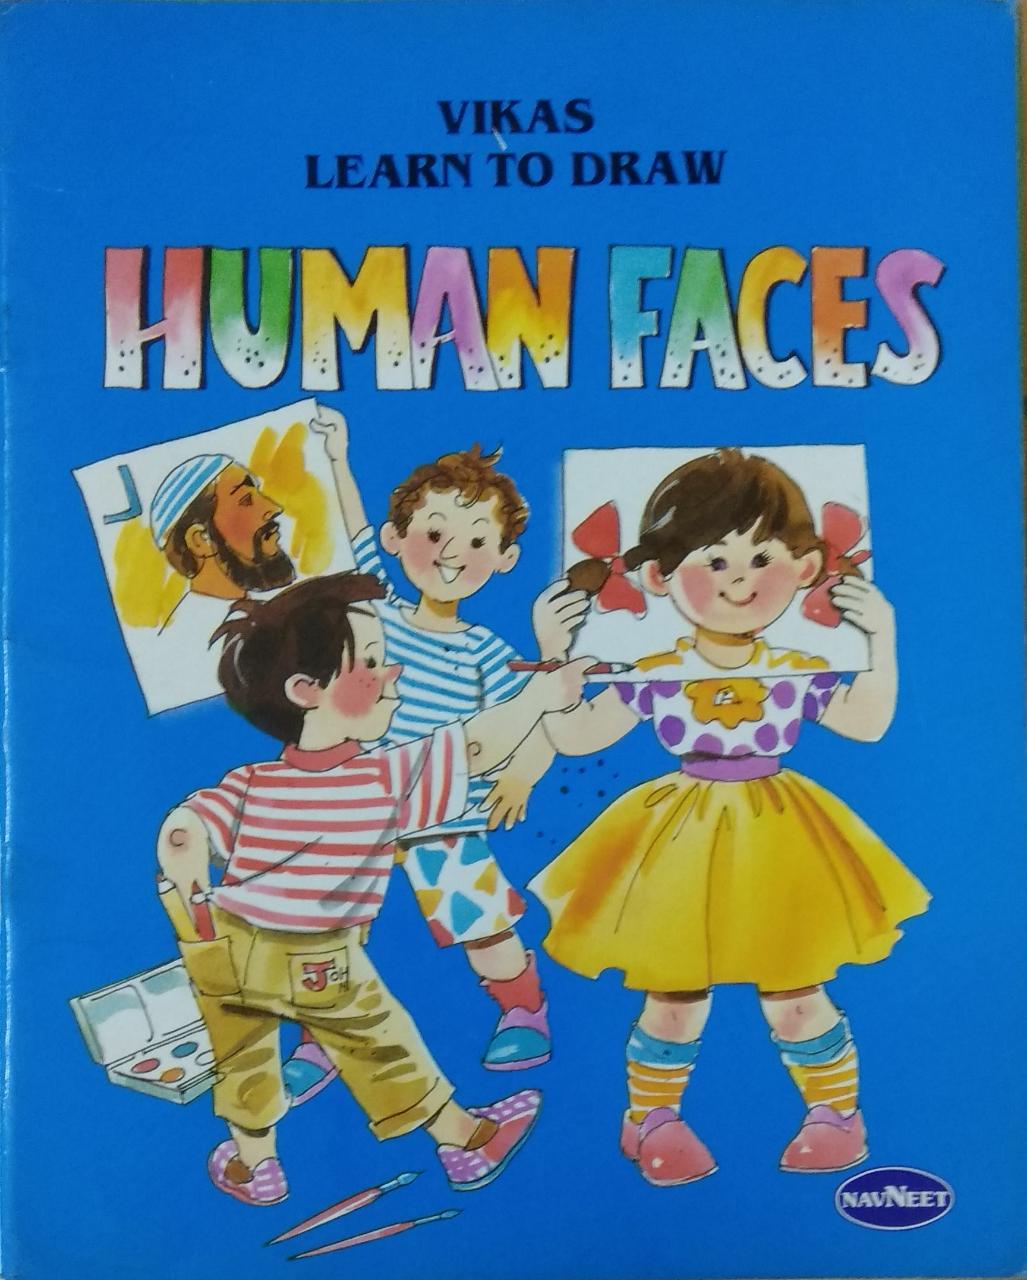 learn to draw human faces  Half Price Books India Books inspire-bookspace.myshopify.com Half Price Books India